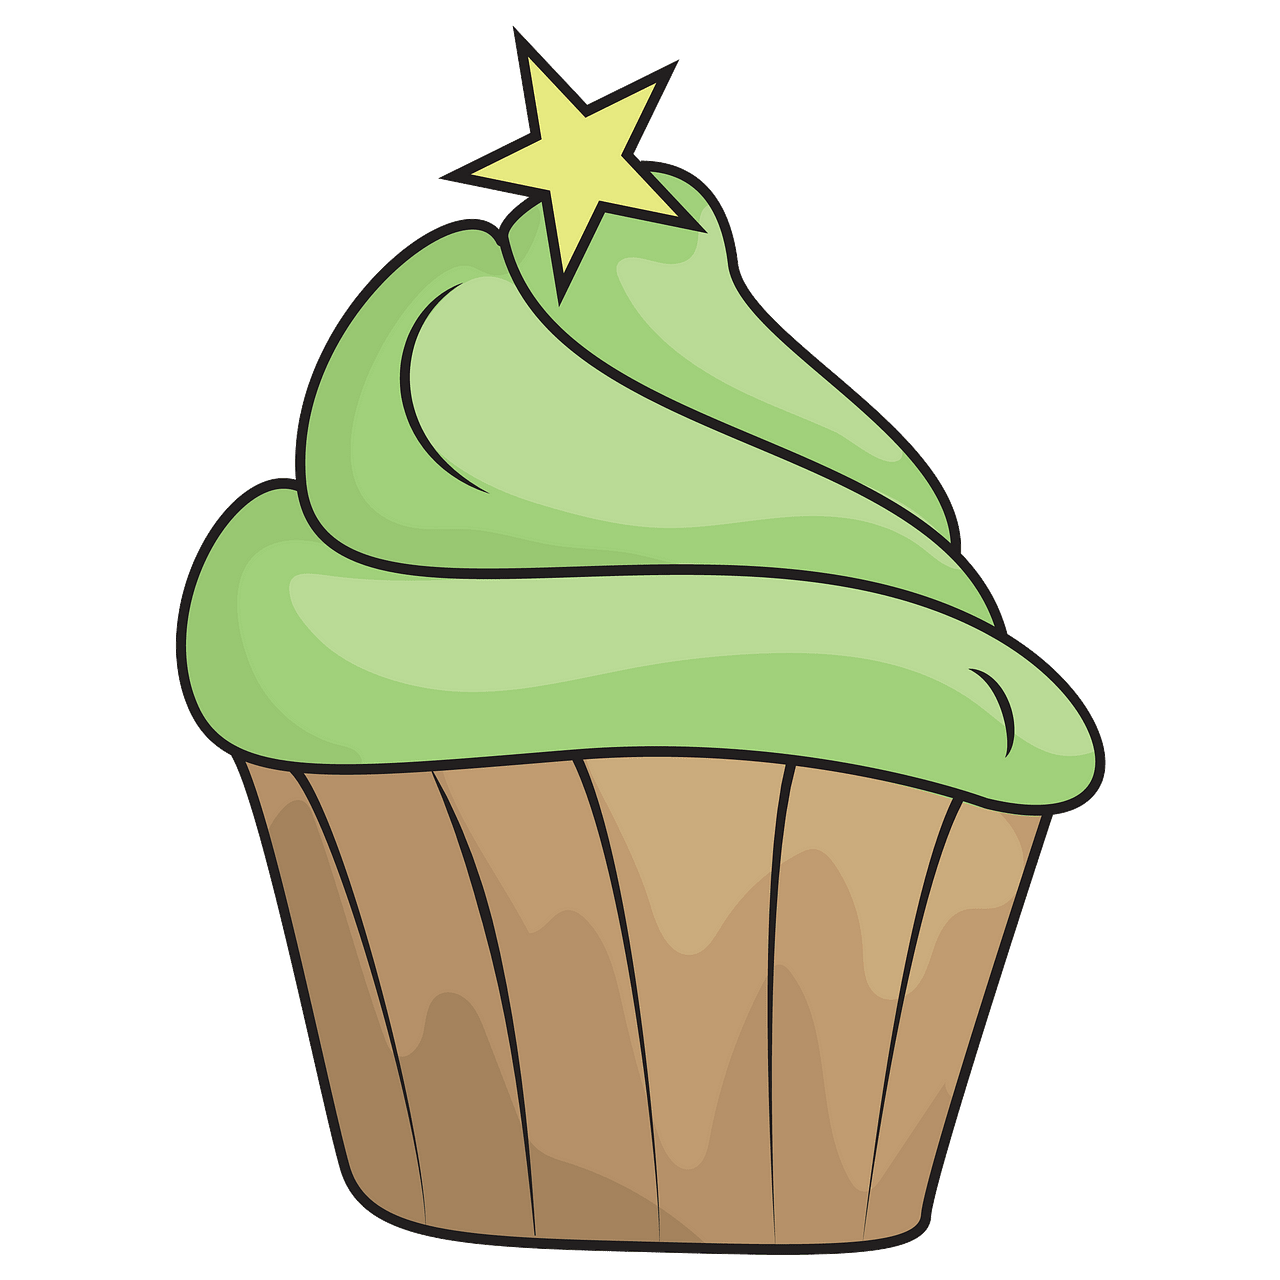 Green cupcake clipart.